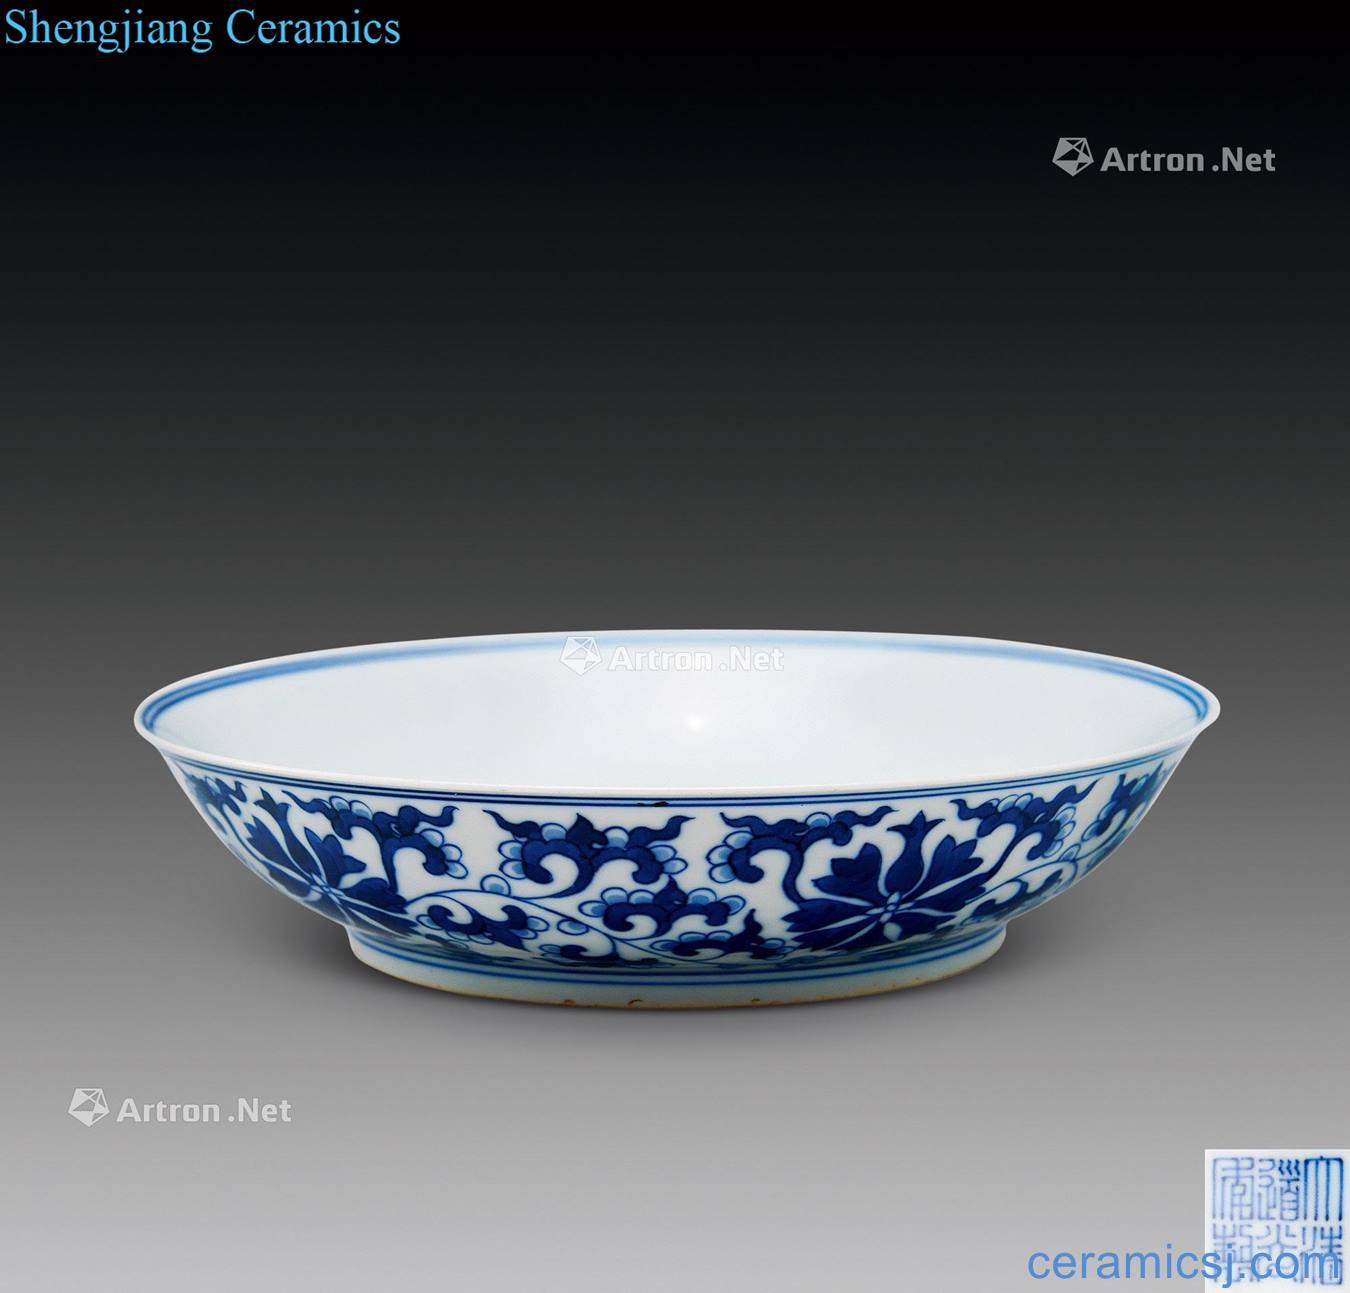 Qing daoguang Kiln porcelain branch as his treasure